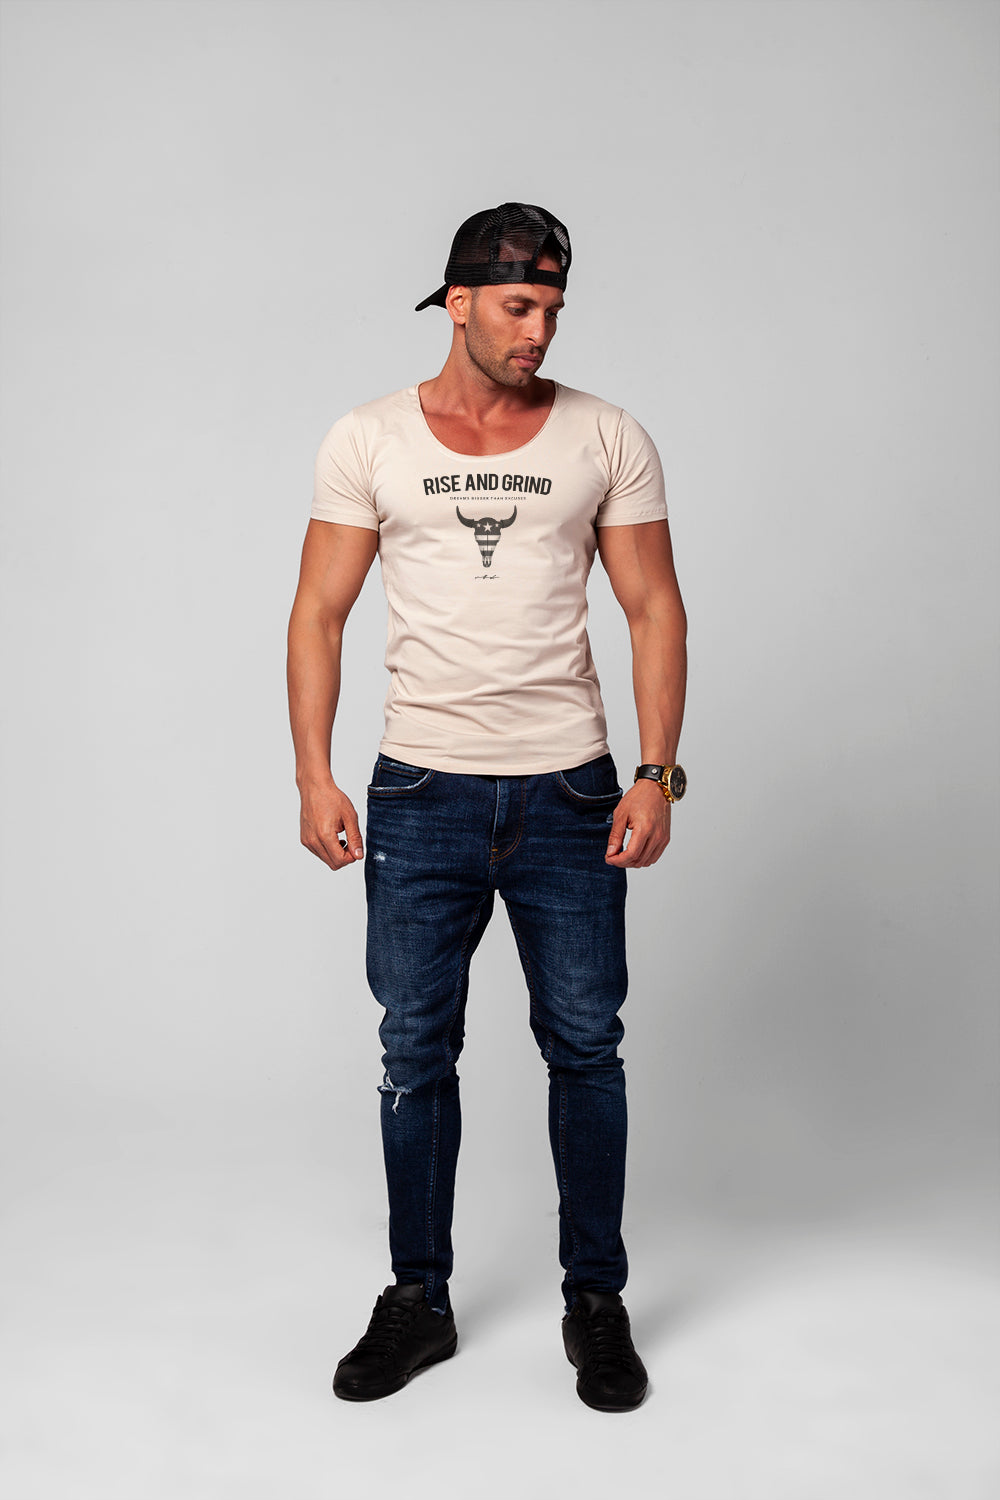 Men's T-shirt "Rise and Grind" Khaki Gray Beige / Color Option / MD932